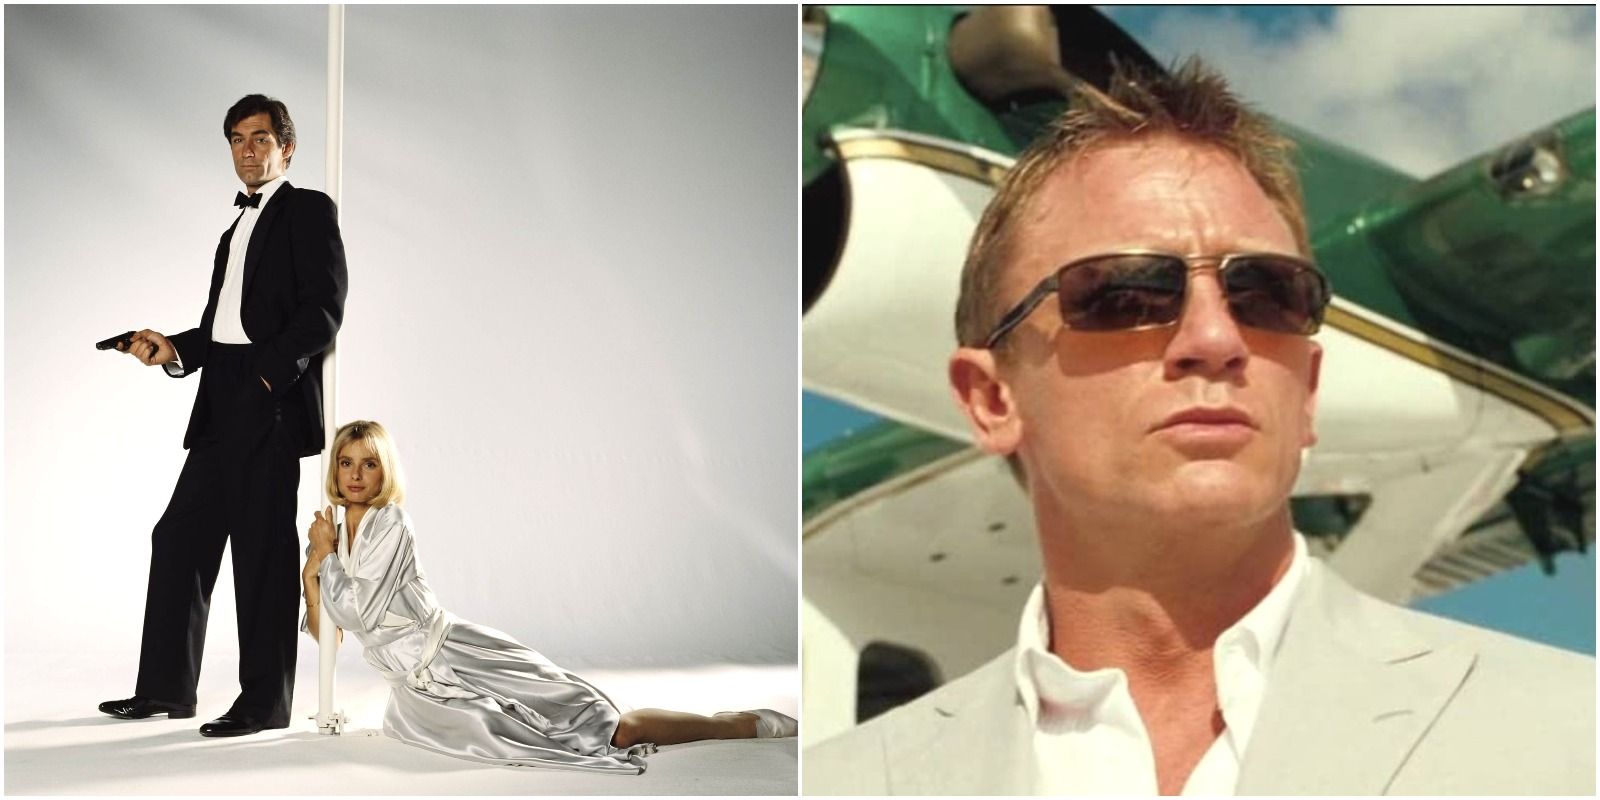 Dalton with his Bond girl, Kara, and Daniel Craig as Bond